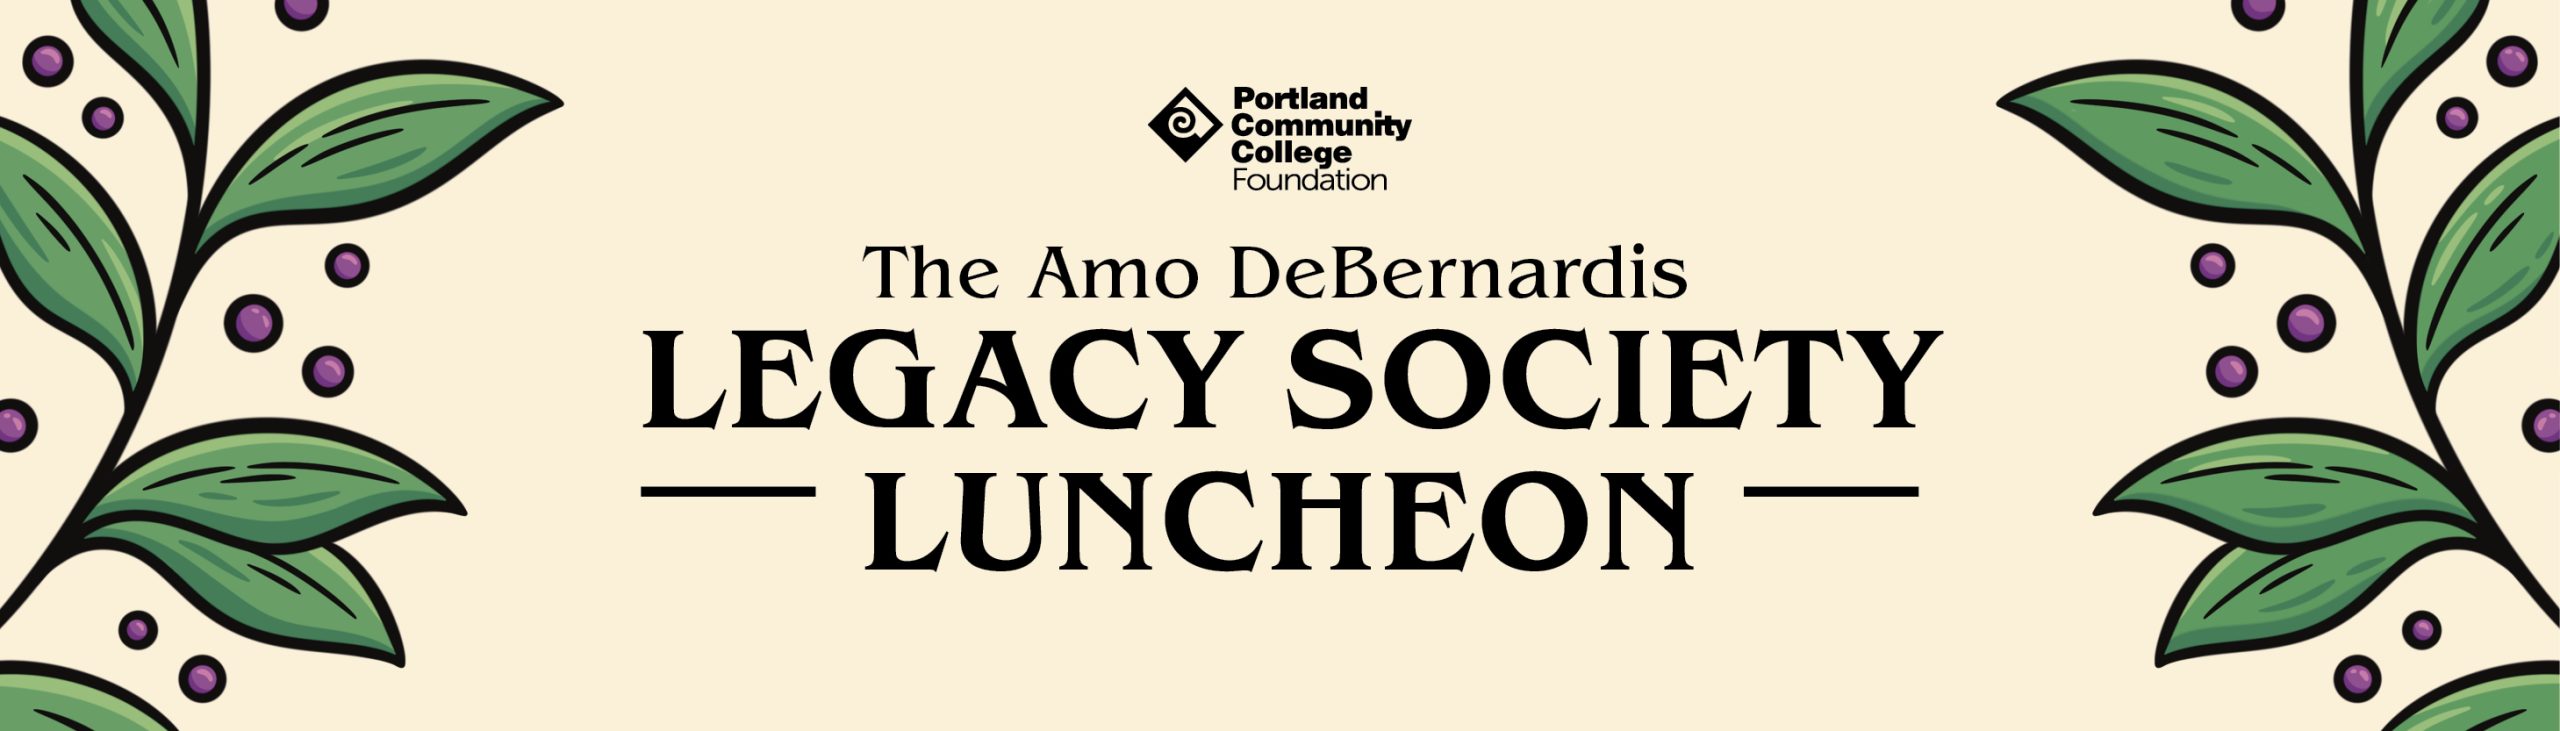 Legacy Society Luncheon header